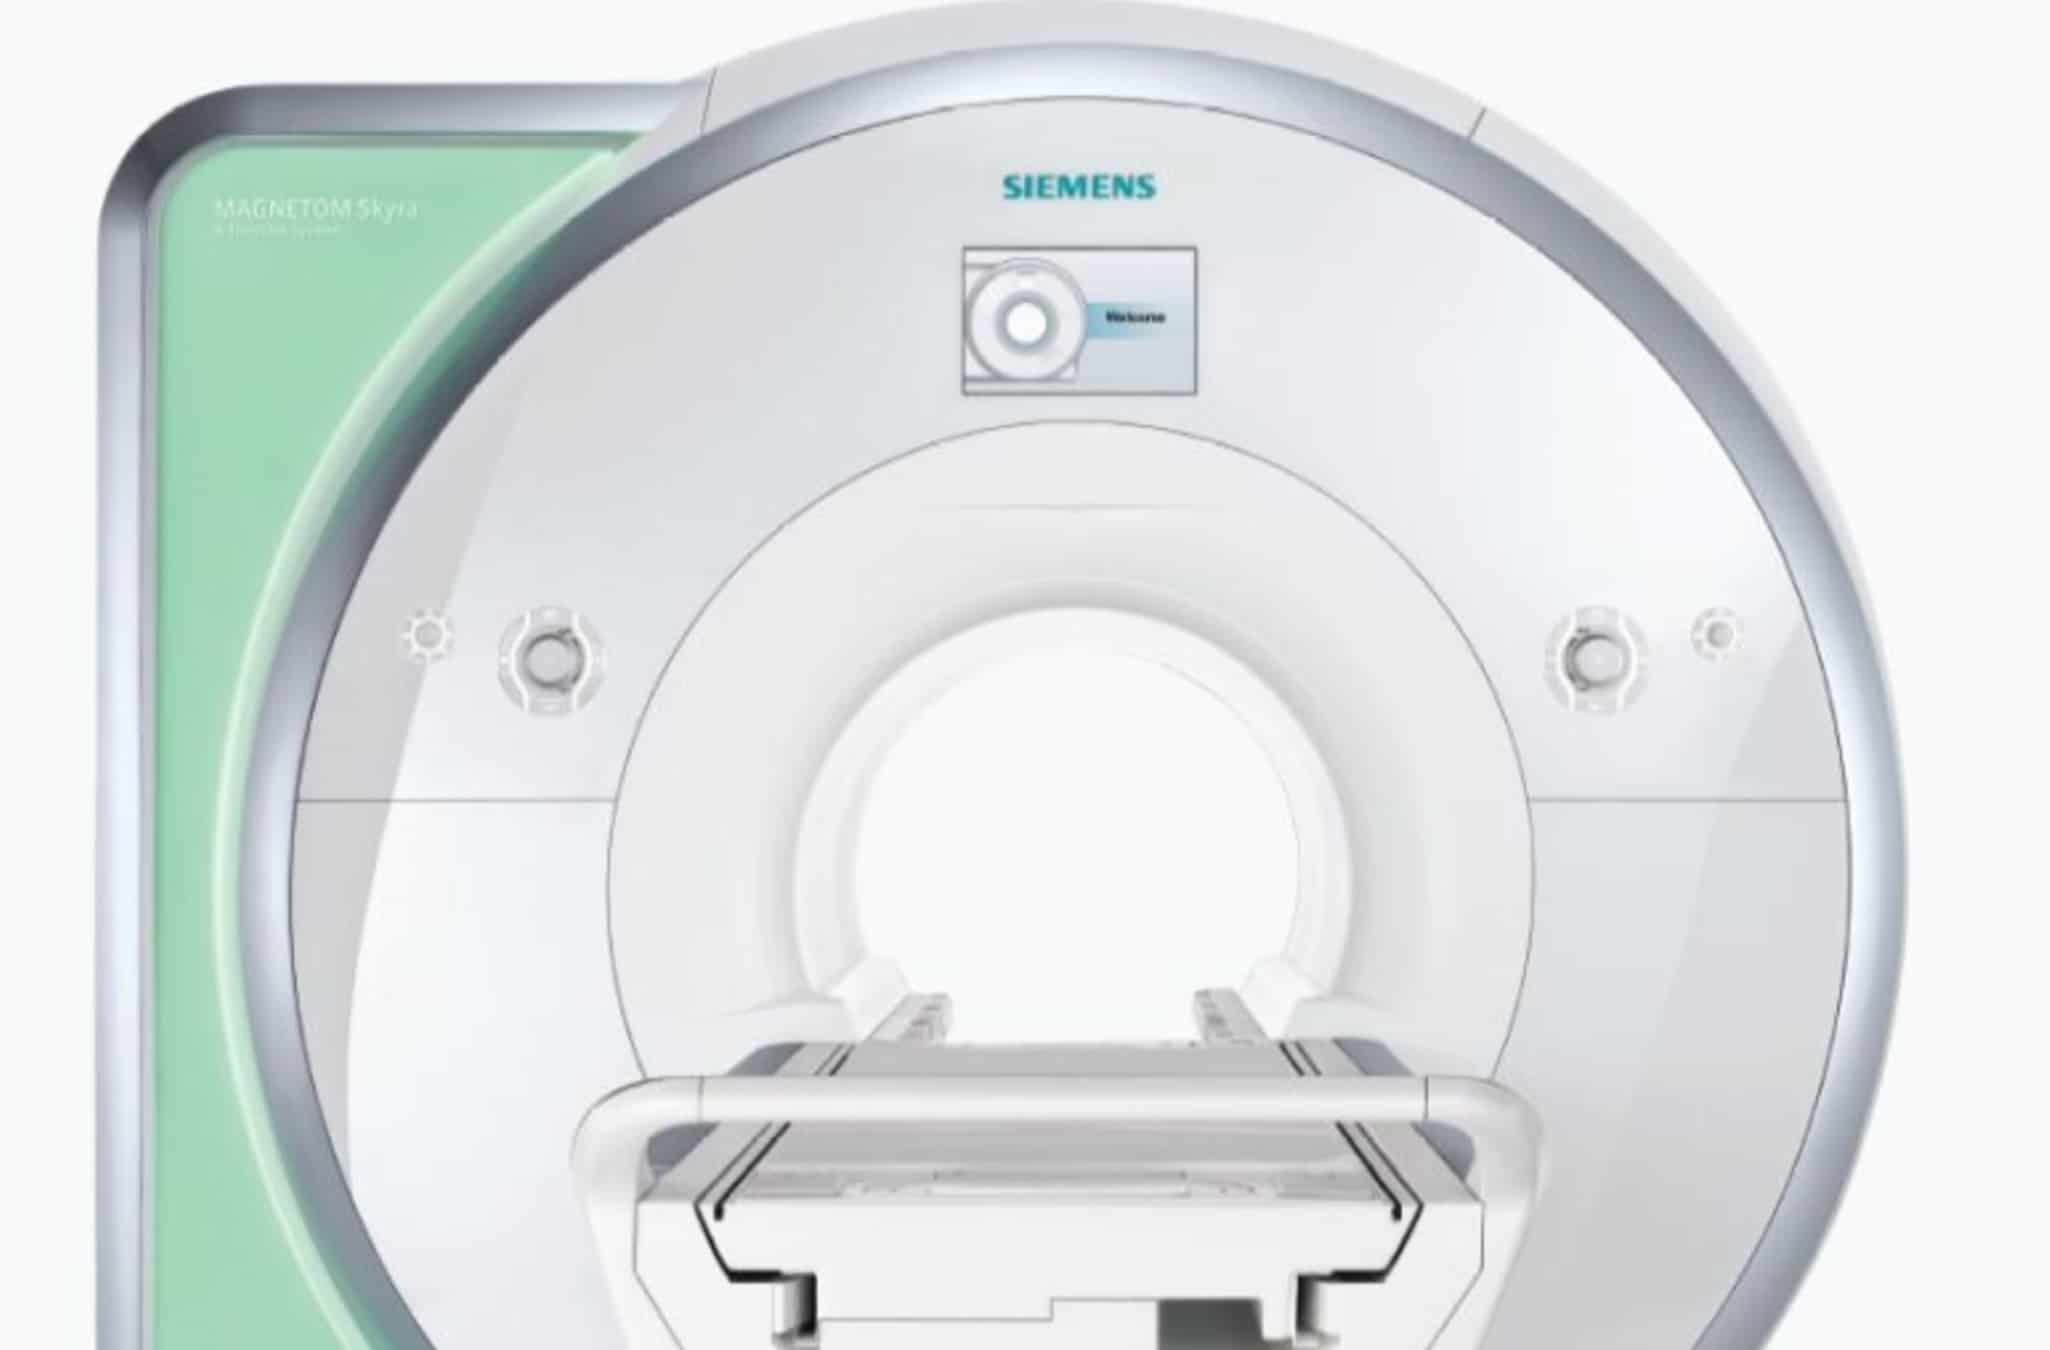 The powerful 3Tesla MRI used by Echelon Health